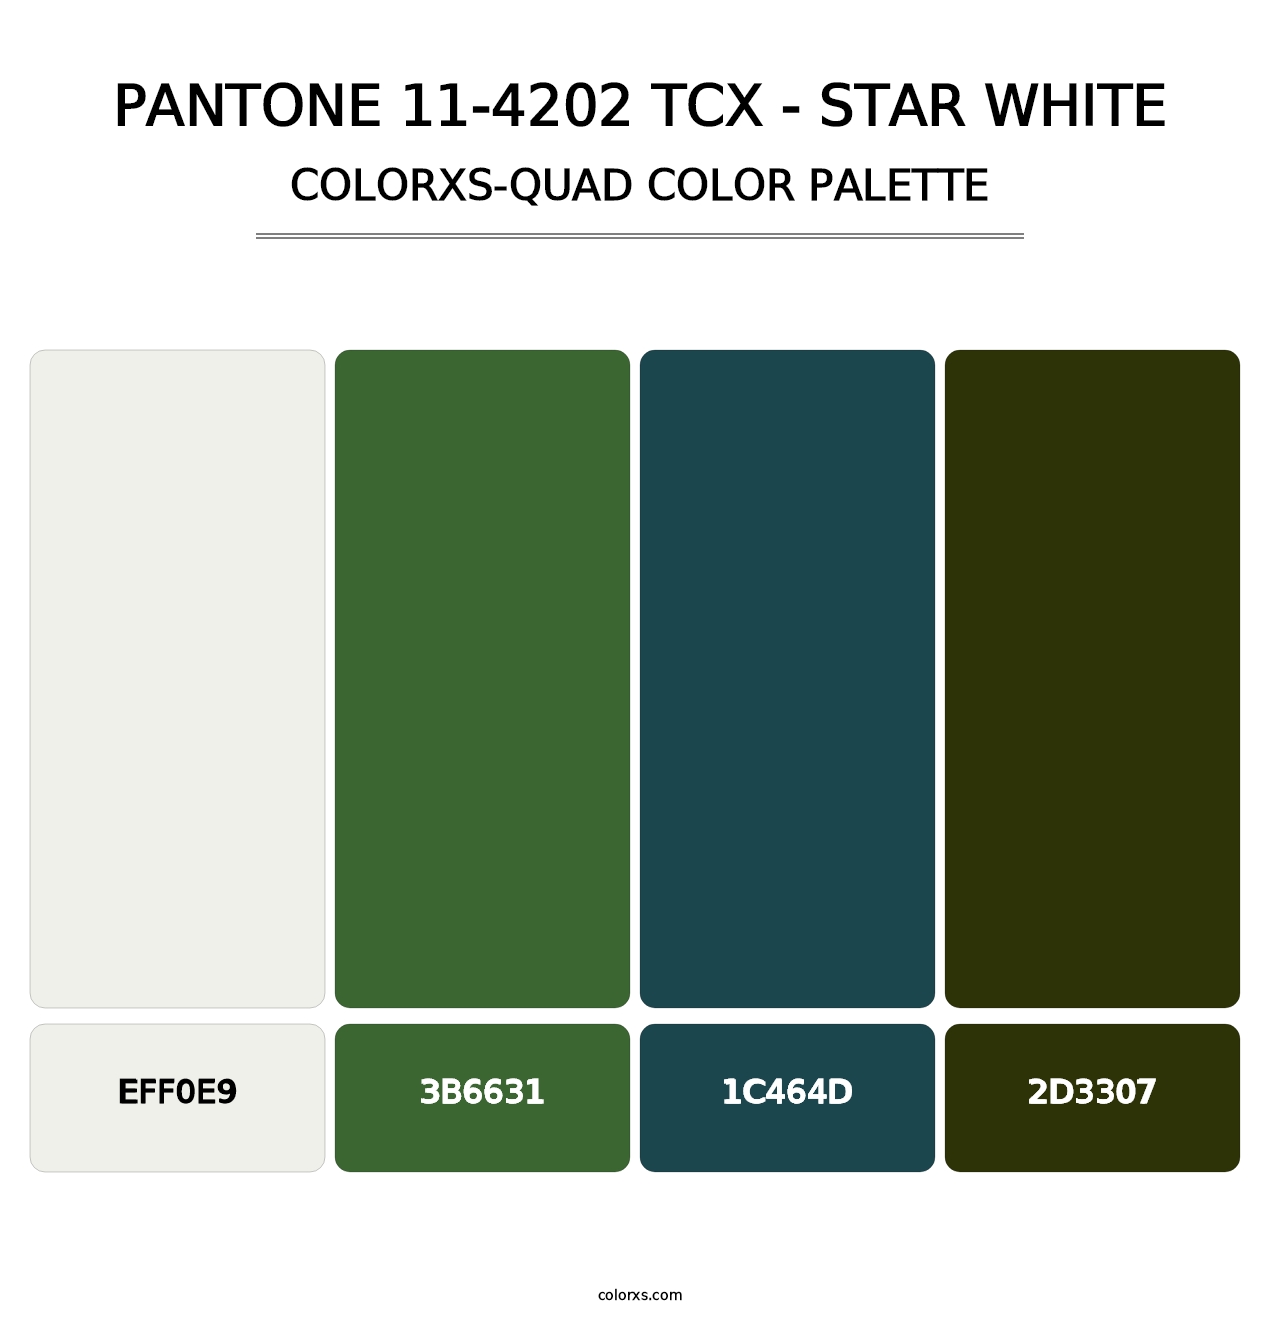 PANTONE 11-4202 TCX - Star White - Colorxs Quad Palette